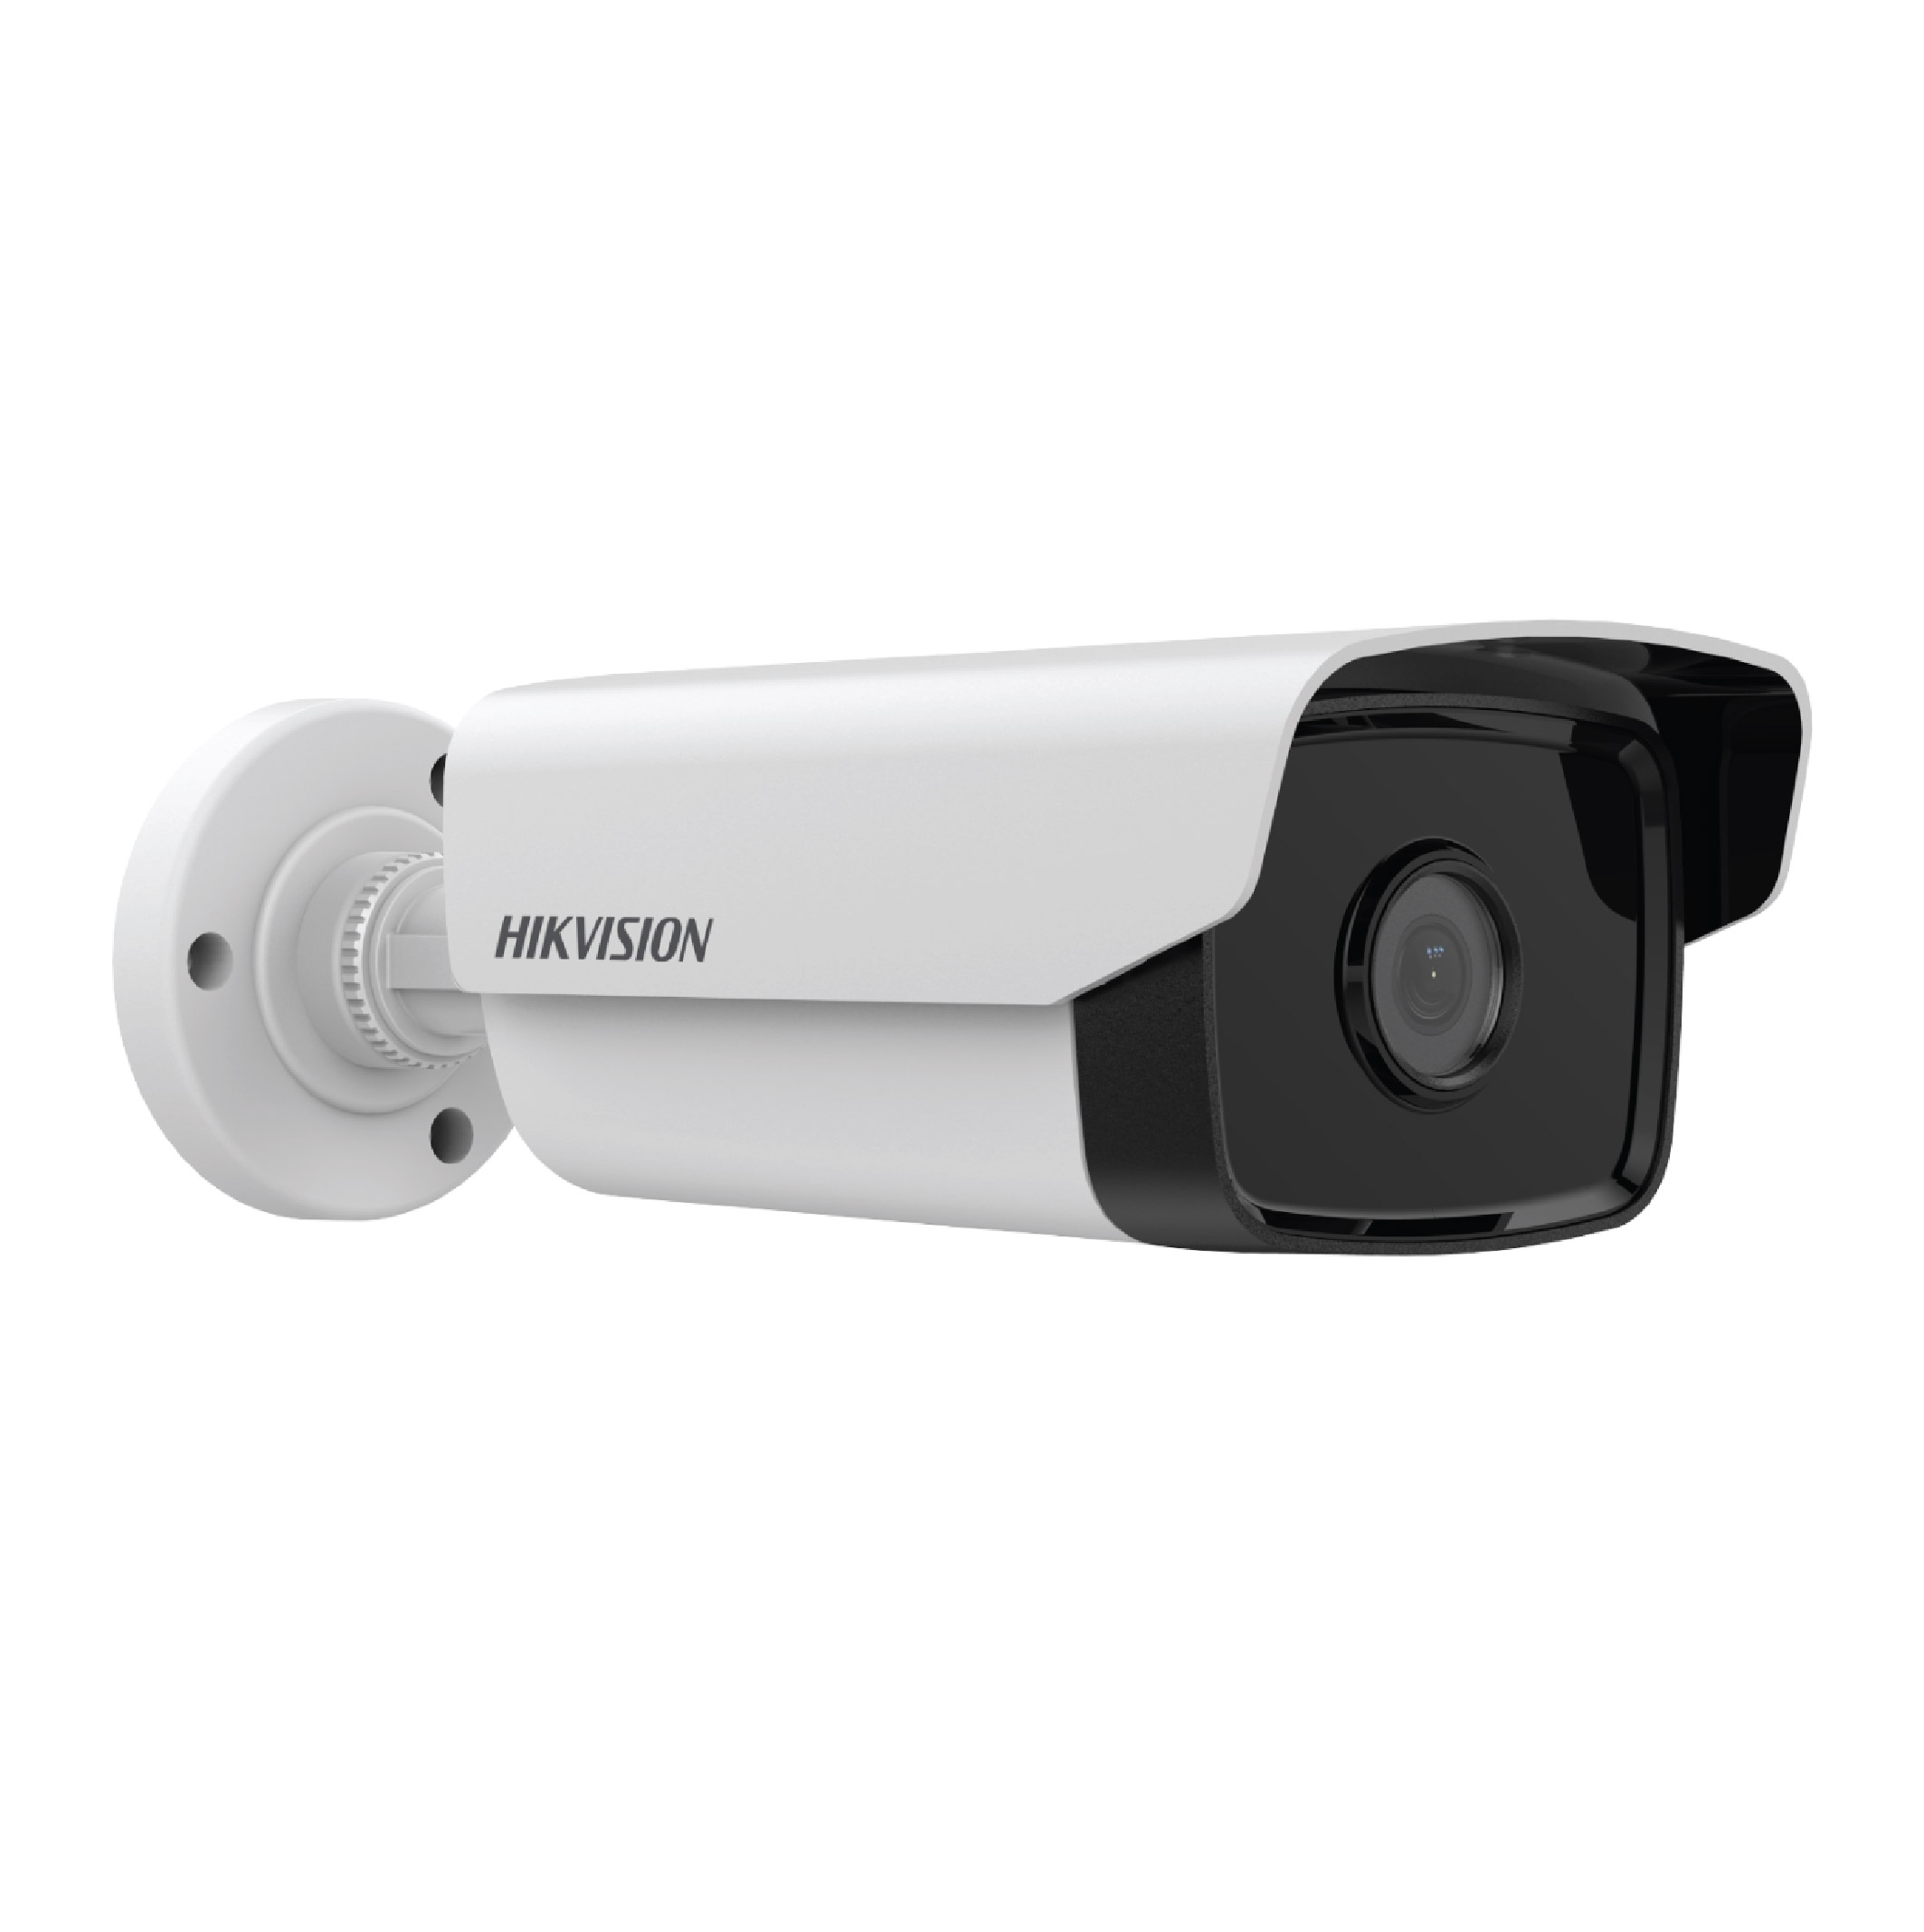 HIKVISION DS-2CD1T23G0-I Turbo HD Camera